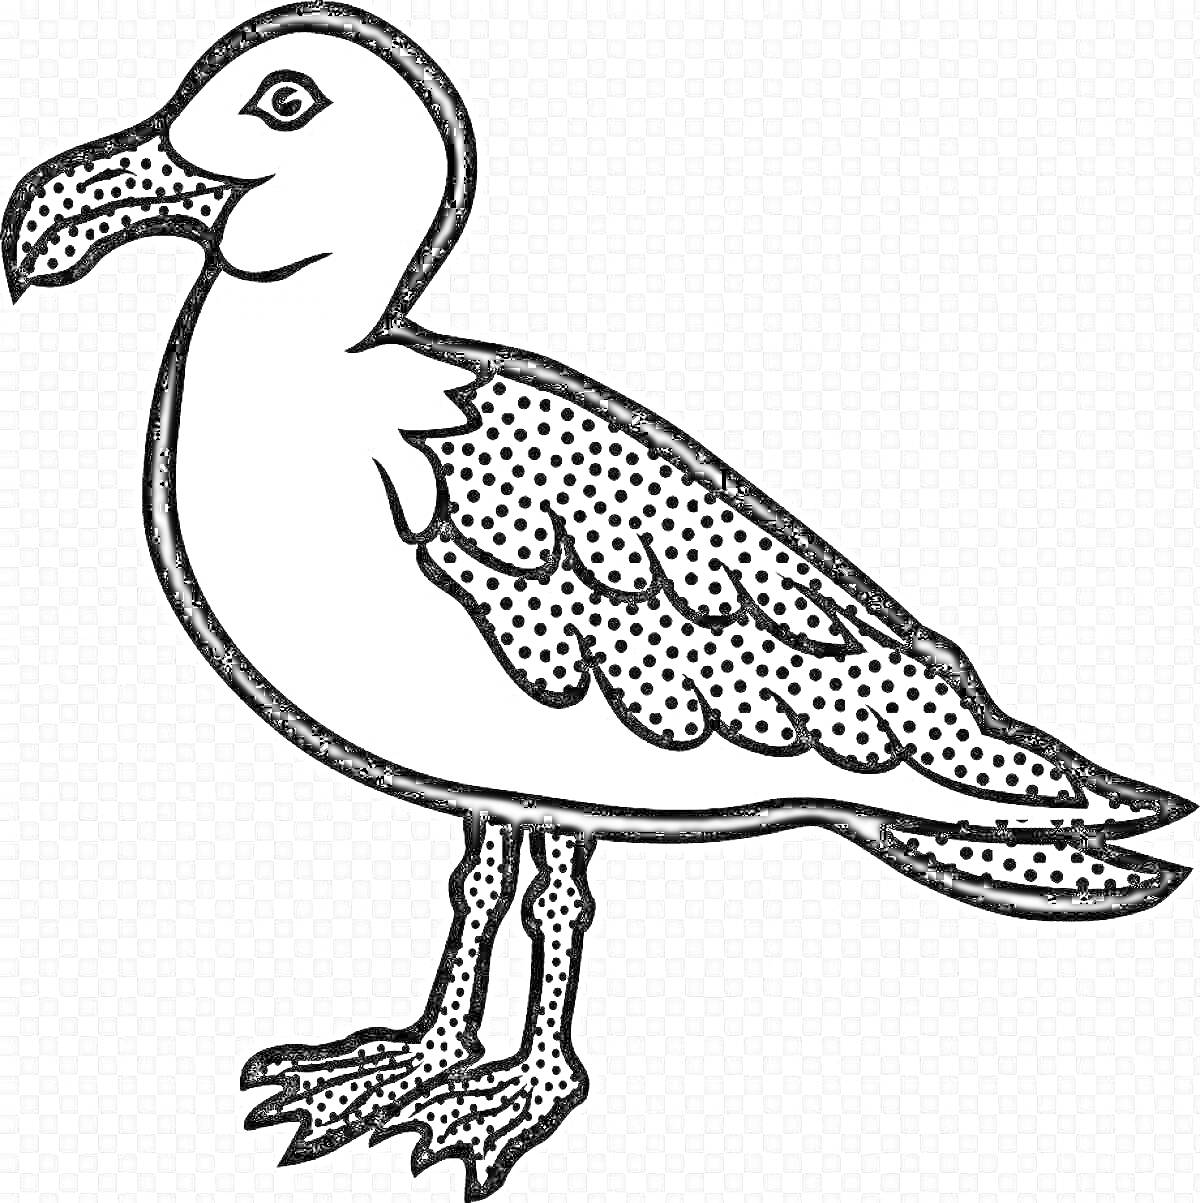 Раскраска Раскраска: чайка с деталями на крыльях и лапах